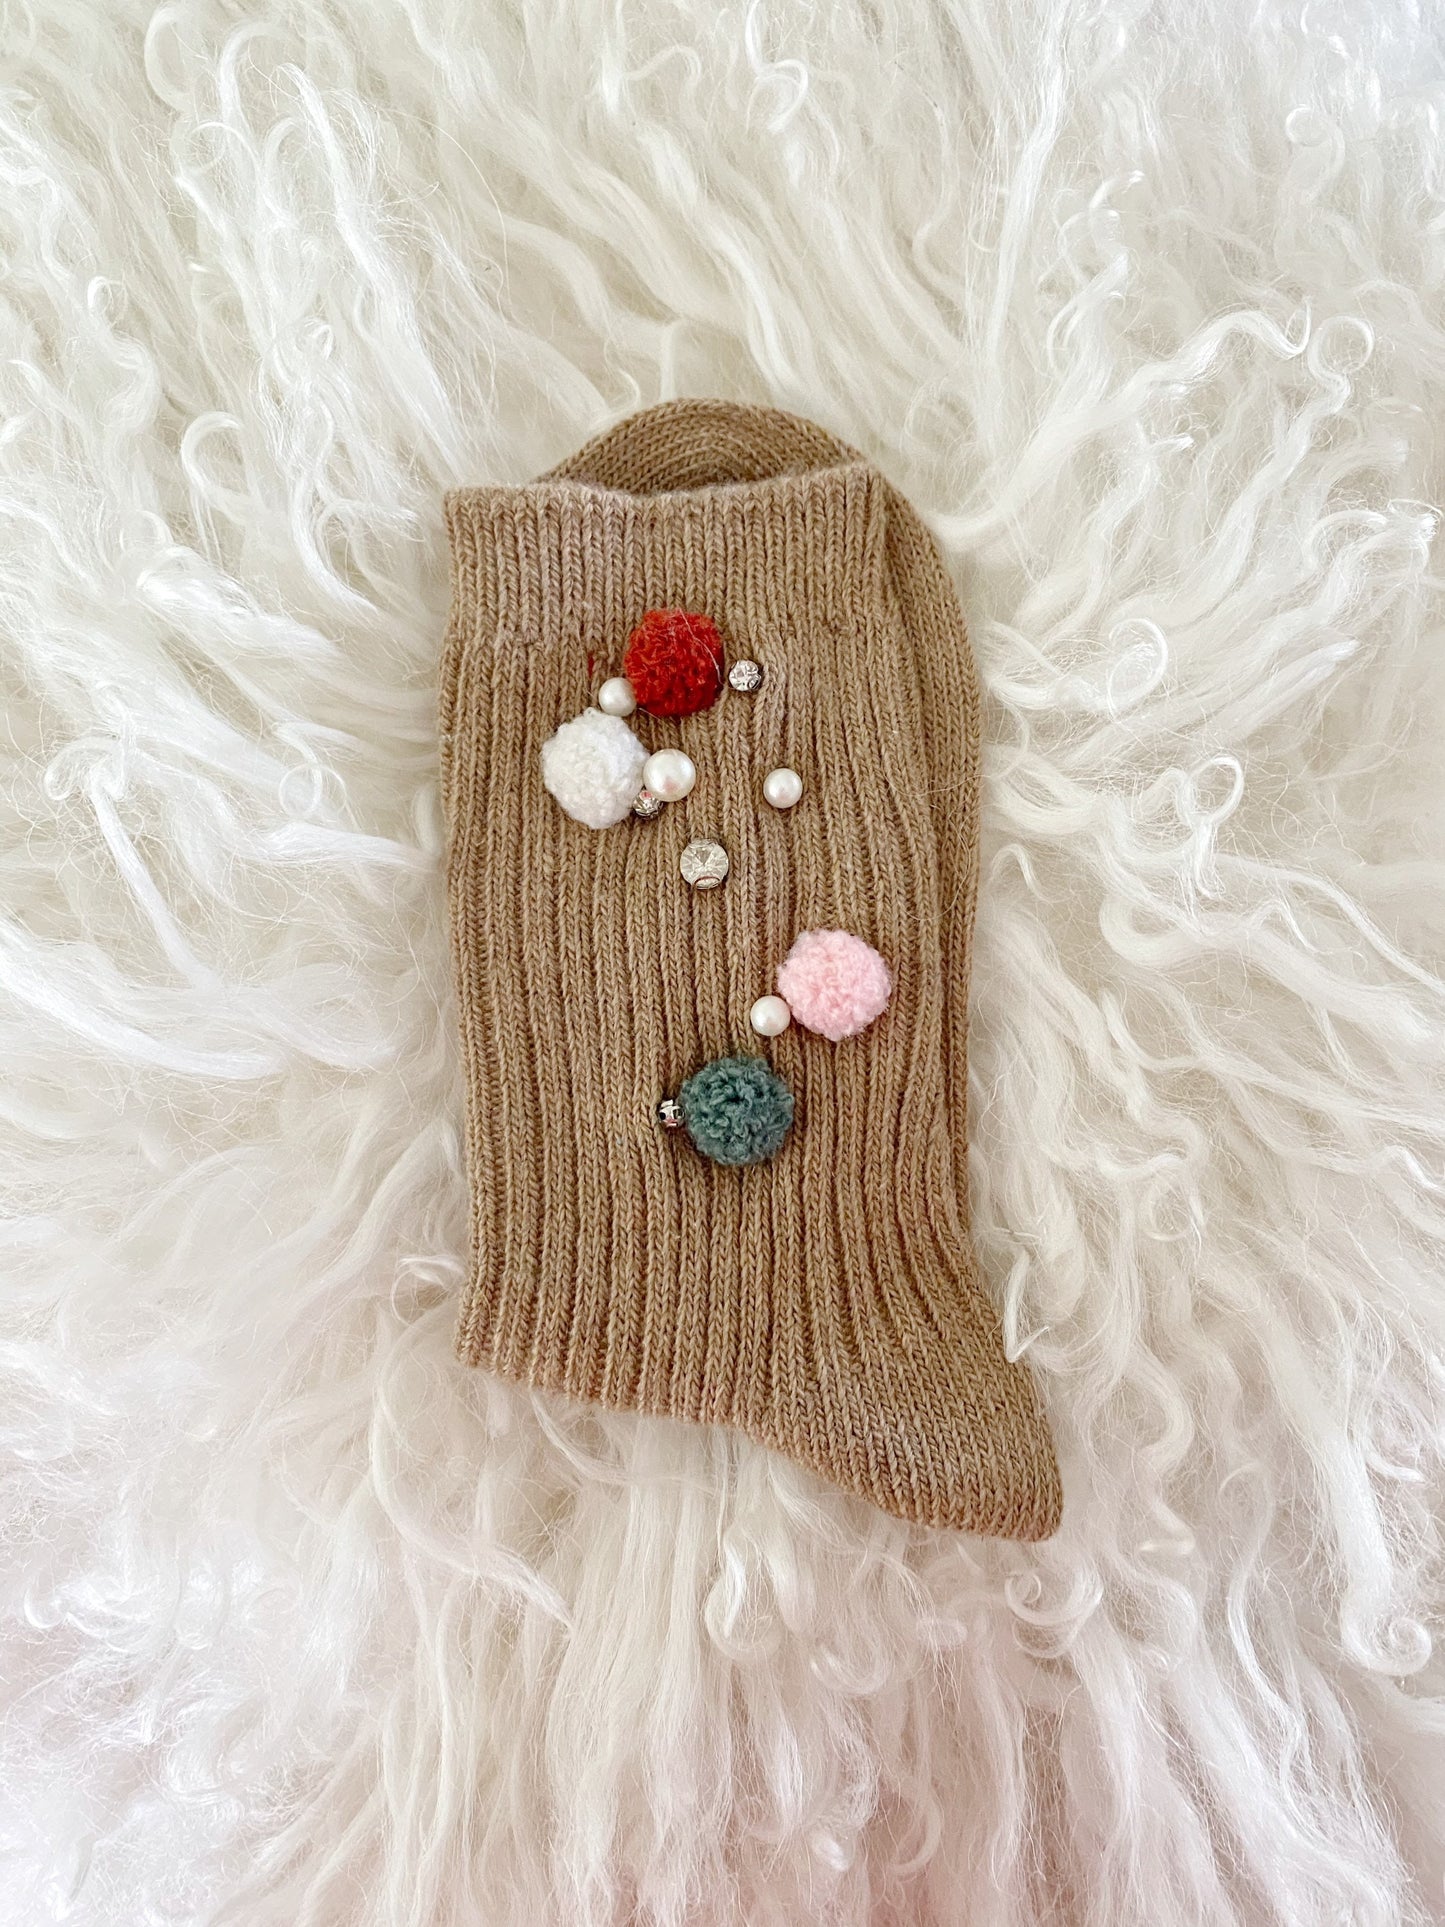 Miss June’s | Women’s | 1 pair| Beading socks｜Creative | Colorful |Craft| Winter | Designed | Art | Gift Idea | Cute | Stylish | Comfortable